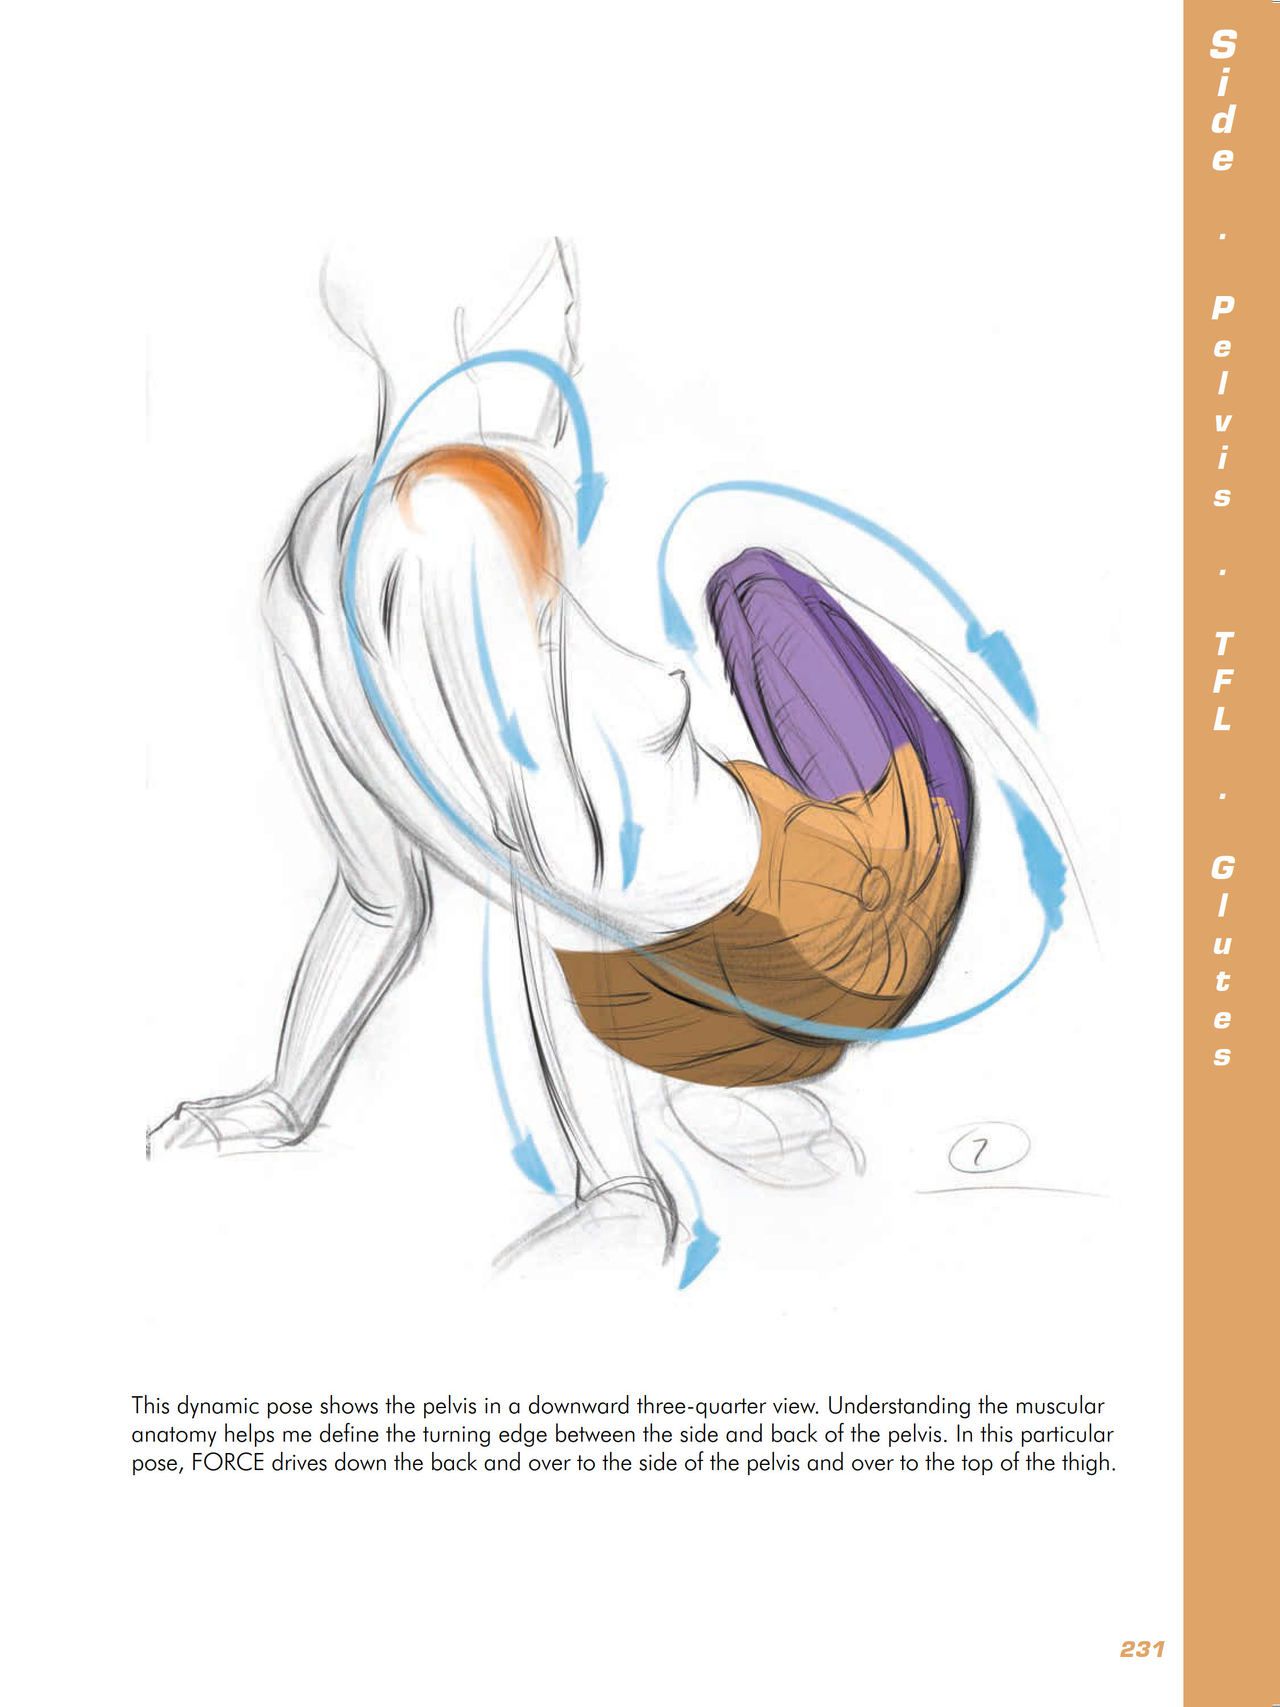 Force. Drawing human anatomy - Michael D. Mattesi [Digital] 252